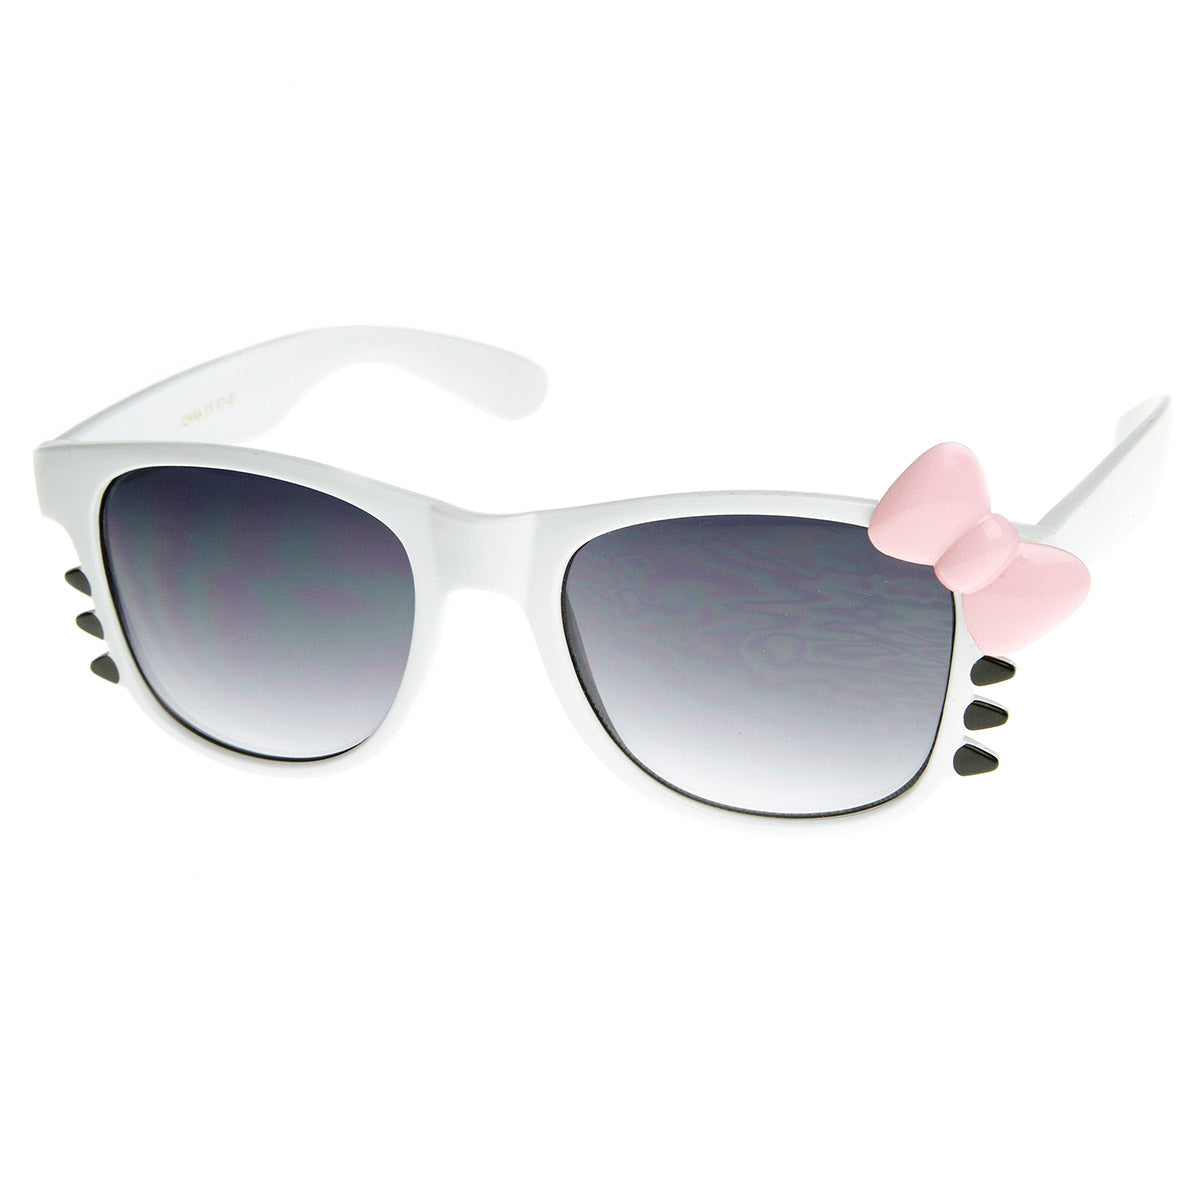 Cute Ladies Retro Fashion Hello Kitty Sunglasses W Bow And Whiskers Sunglass La